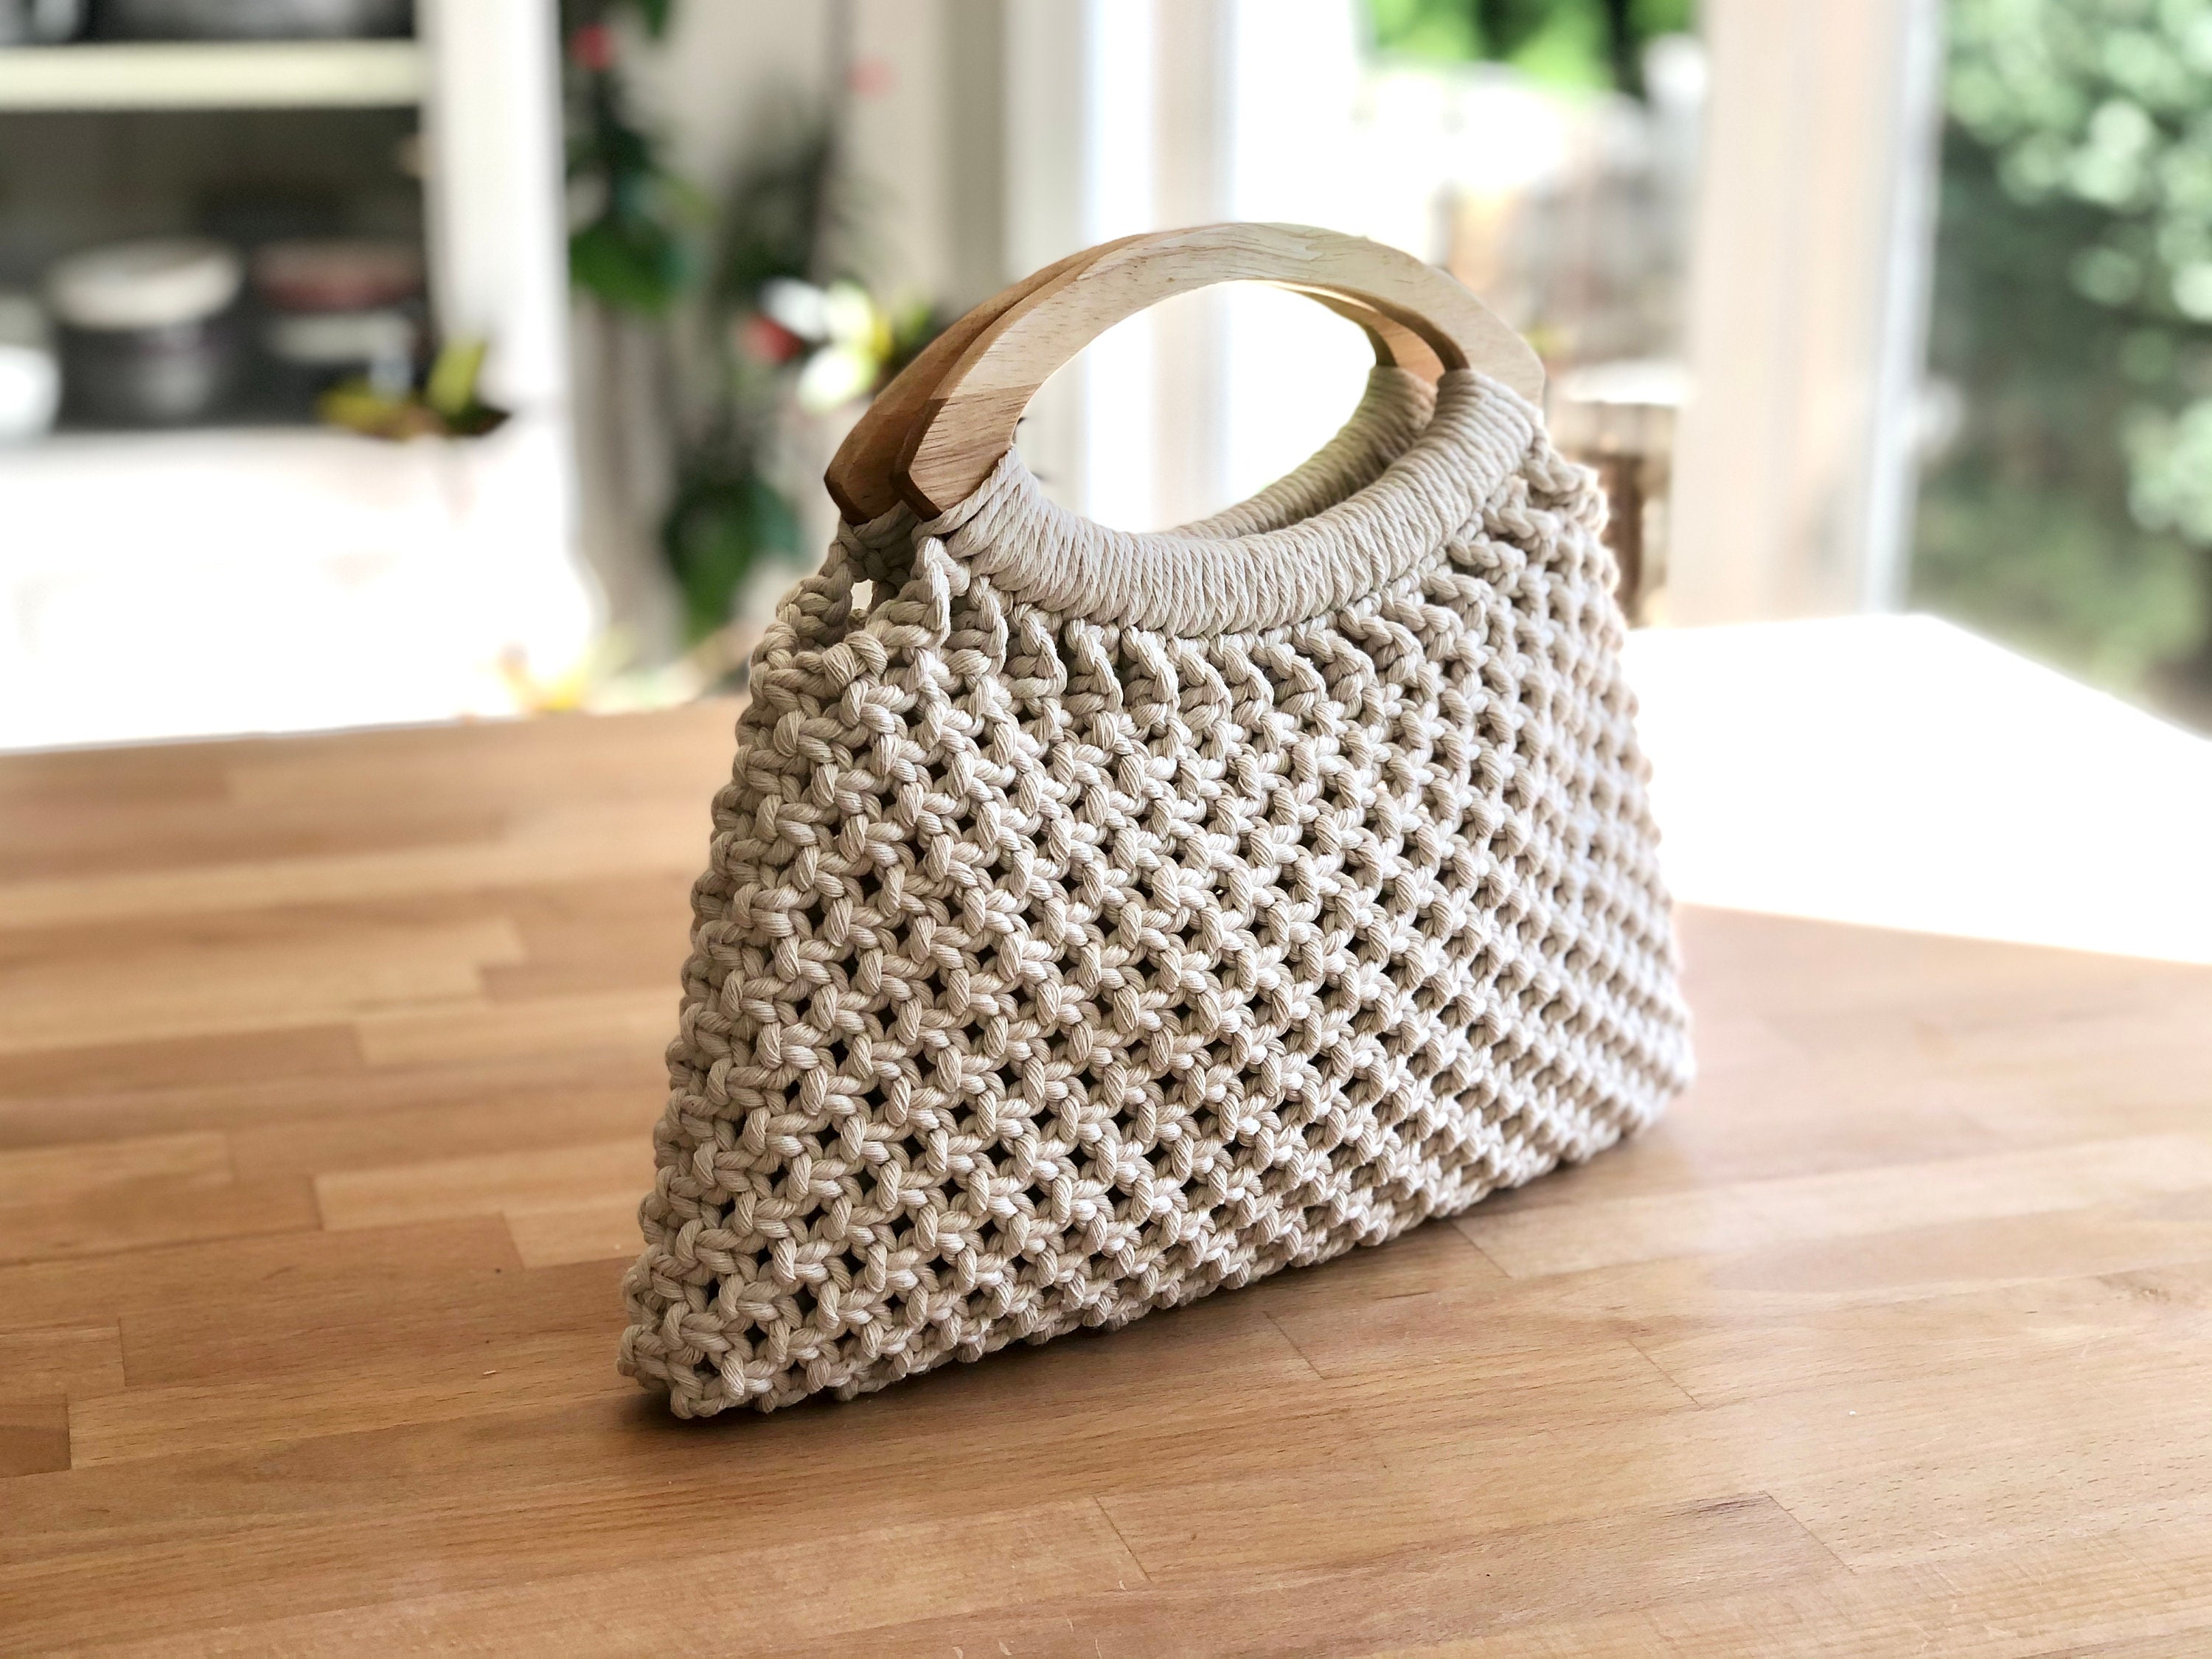 How to make a Macrame hand bag | Macrame bag new design | sangitas craft -  YouTube